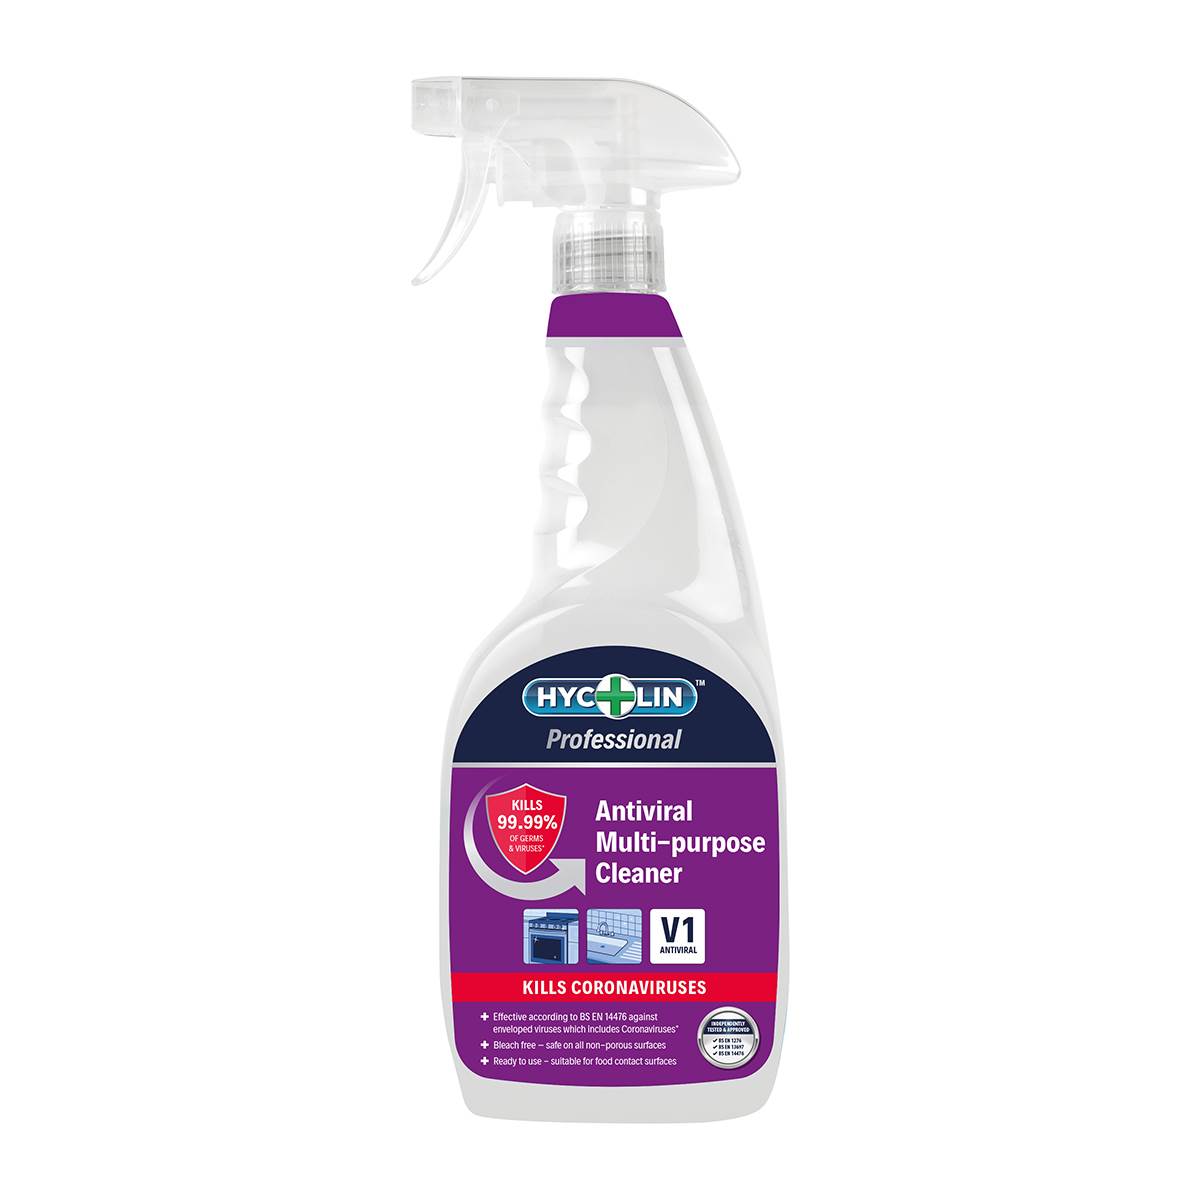 V1 Antiviral Disinfectant Spray, 6x 750ml